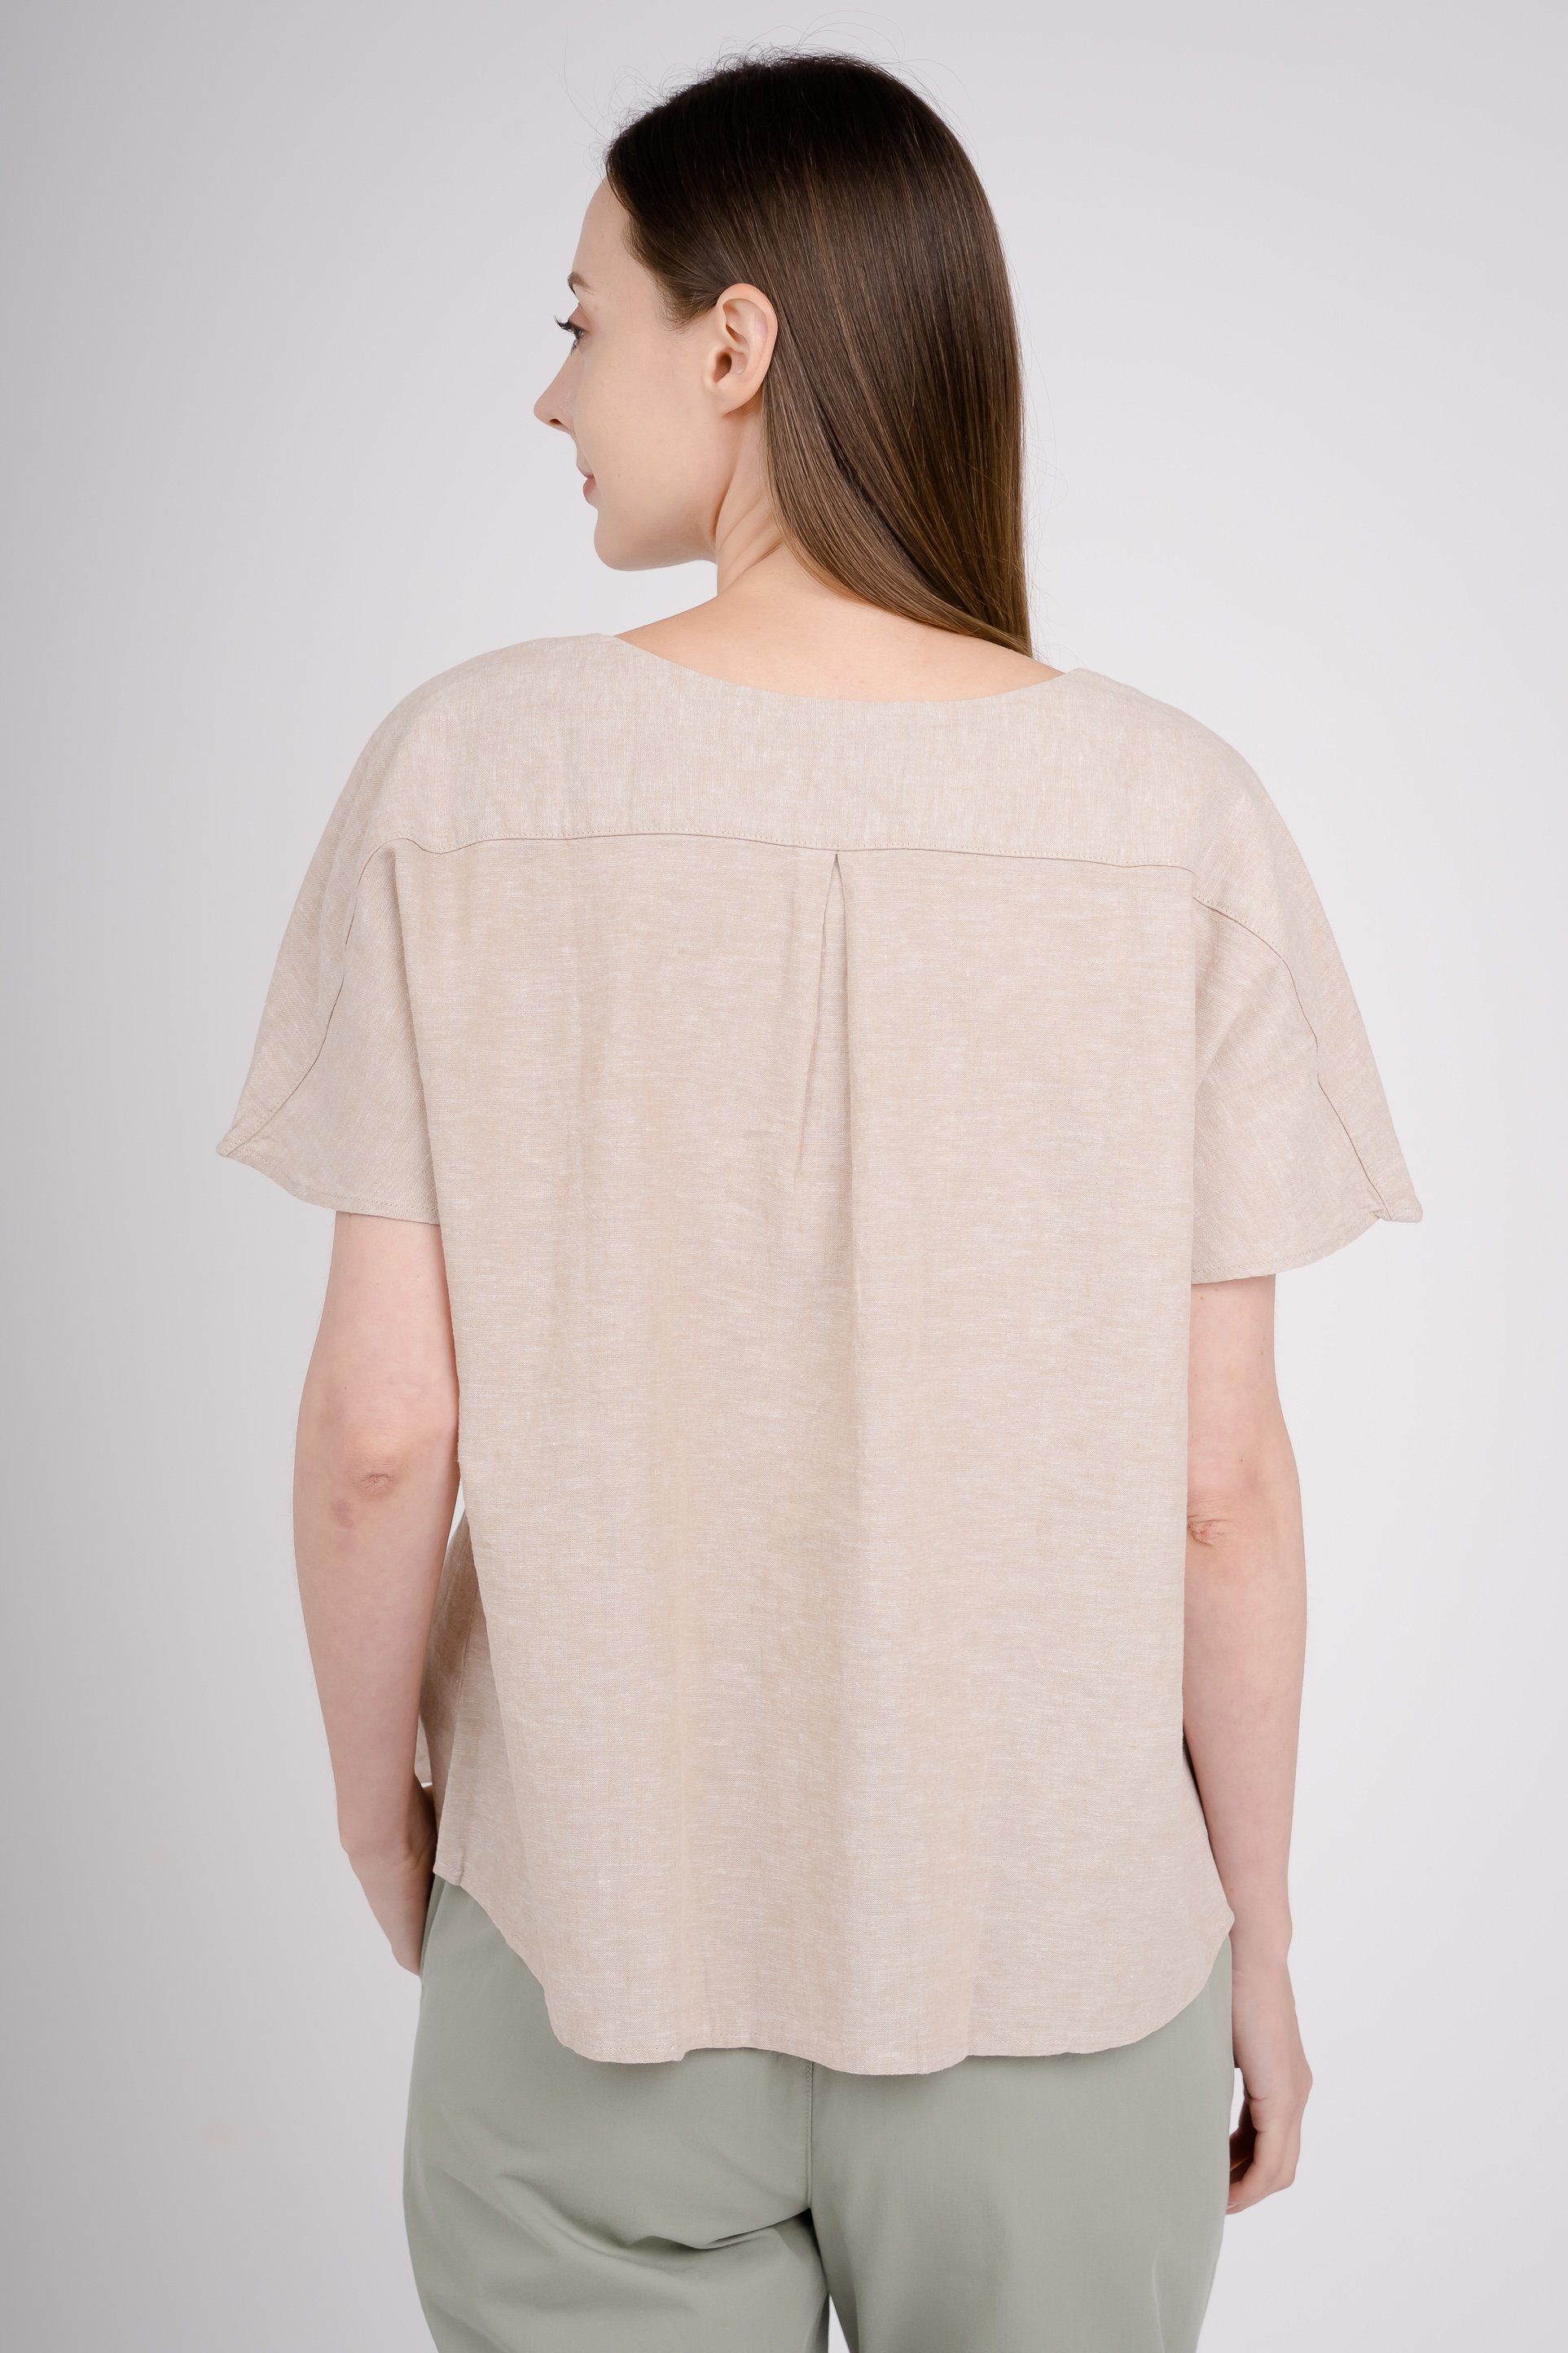 GIORDANO T-Shirt mit Kimono-Ärmeln